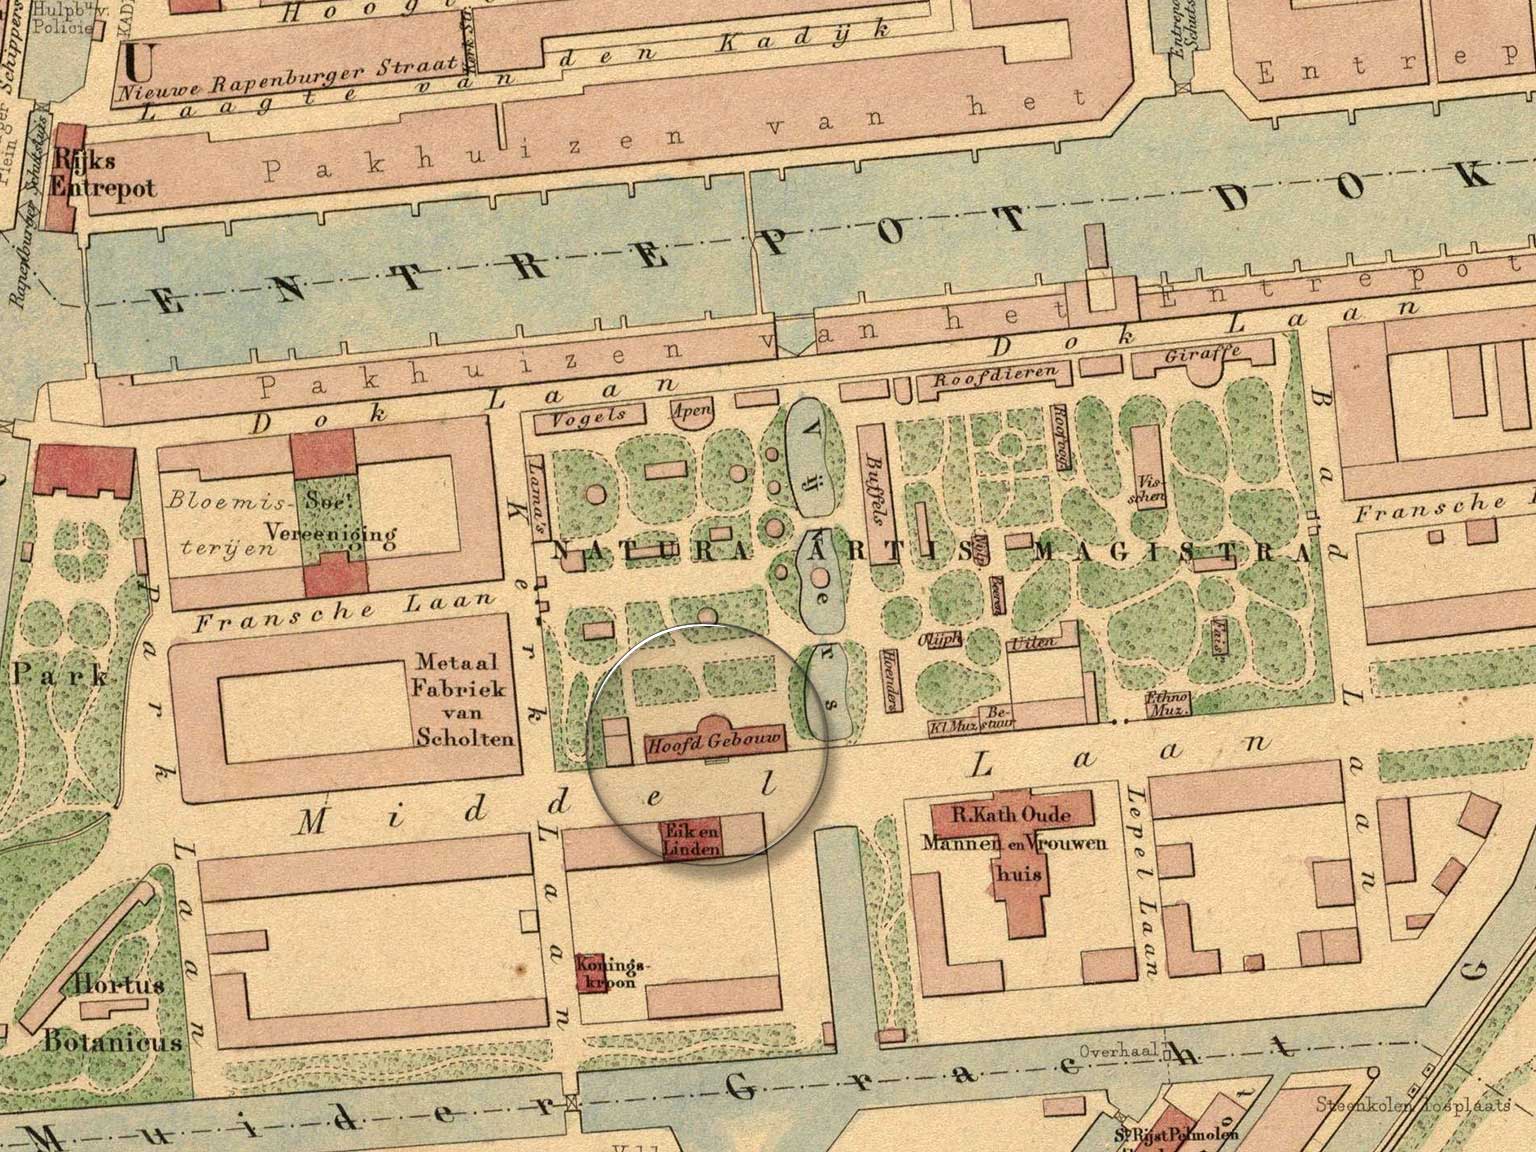 Groote Museum, Amsterdam, op een kaart uit 1867